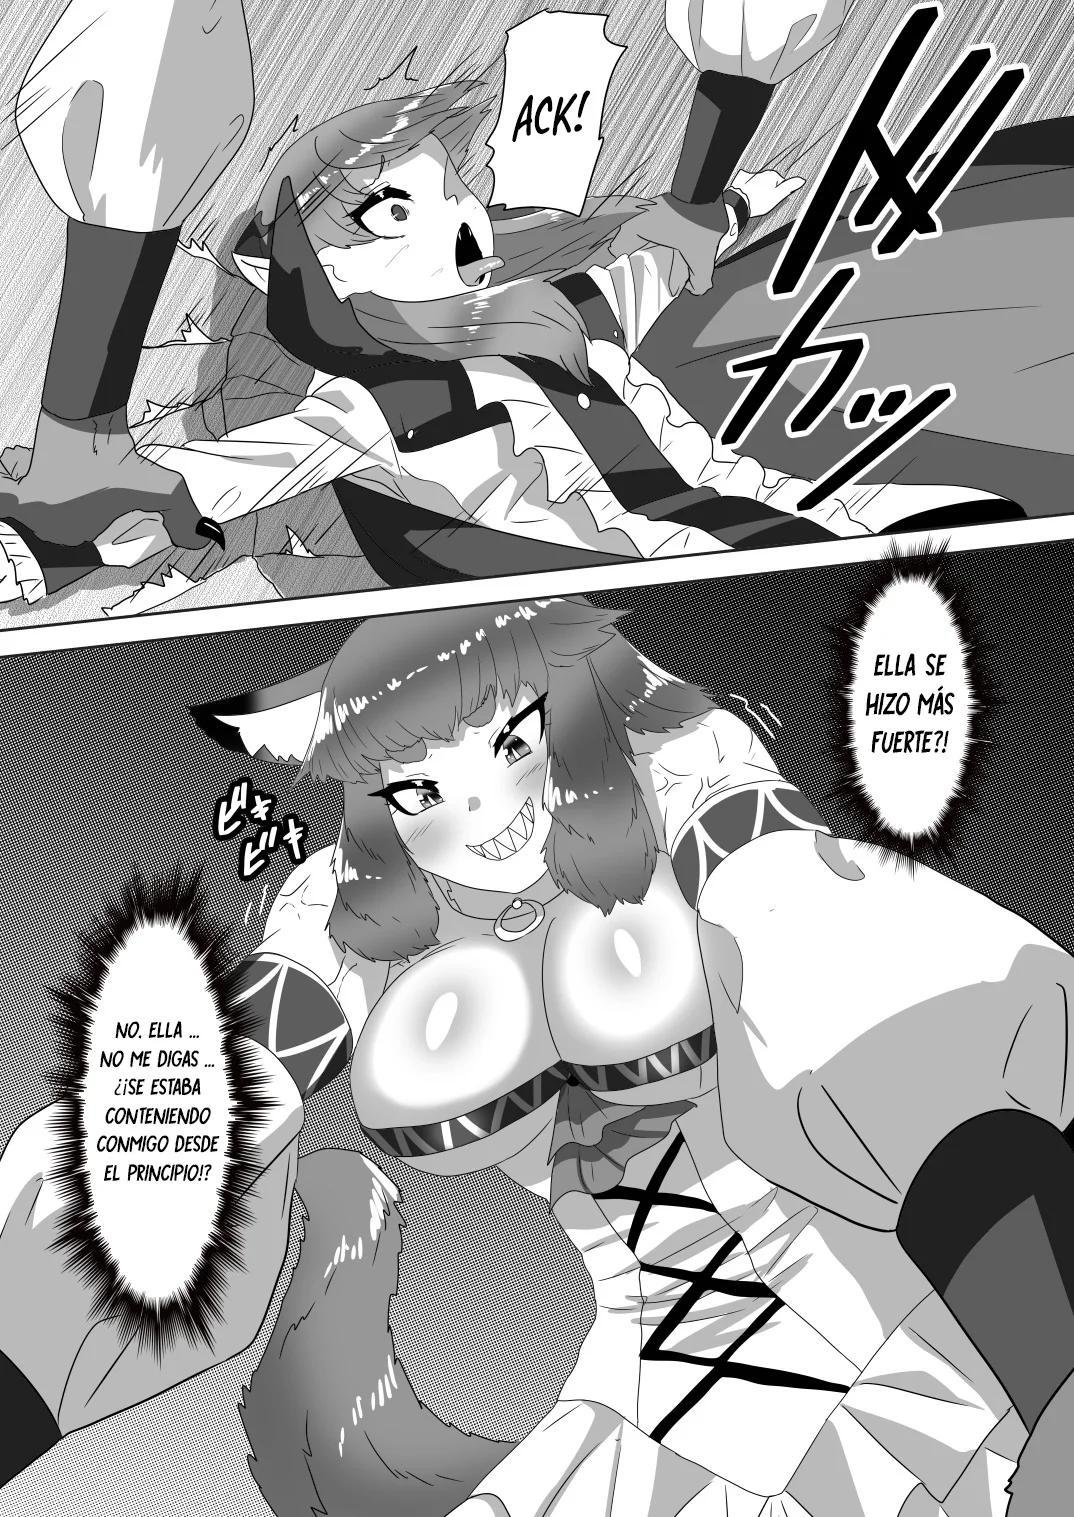 Vampire Shota And Sacrificial Futanari She-Werewolf - 12